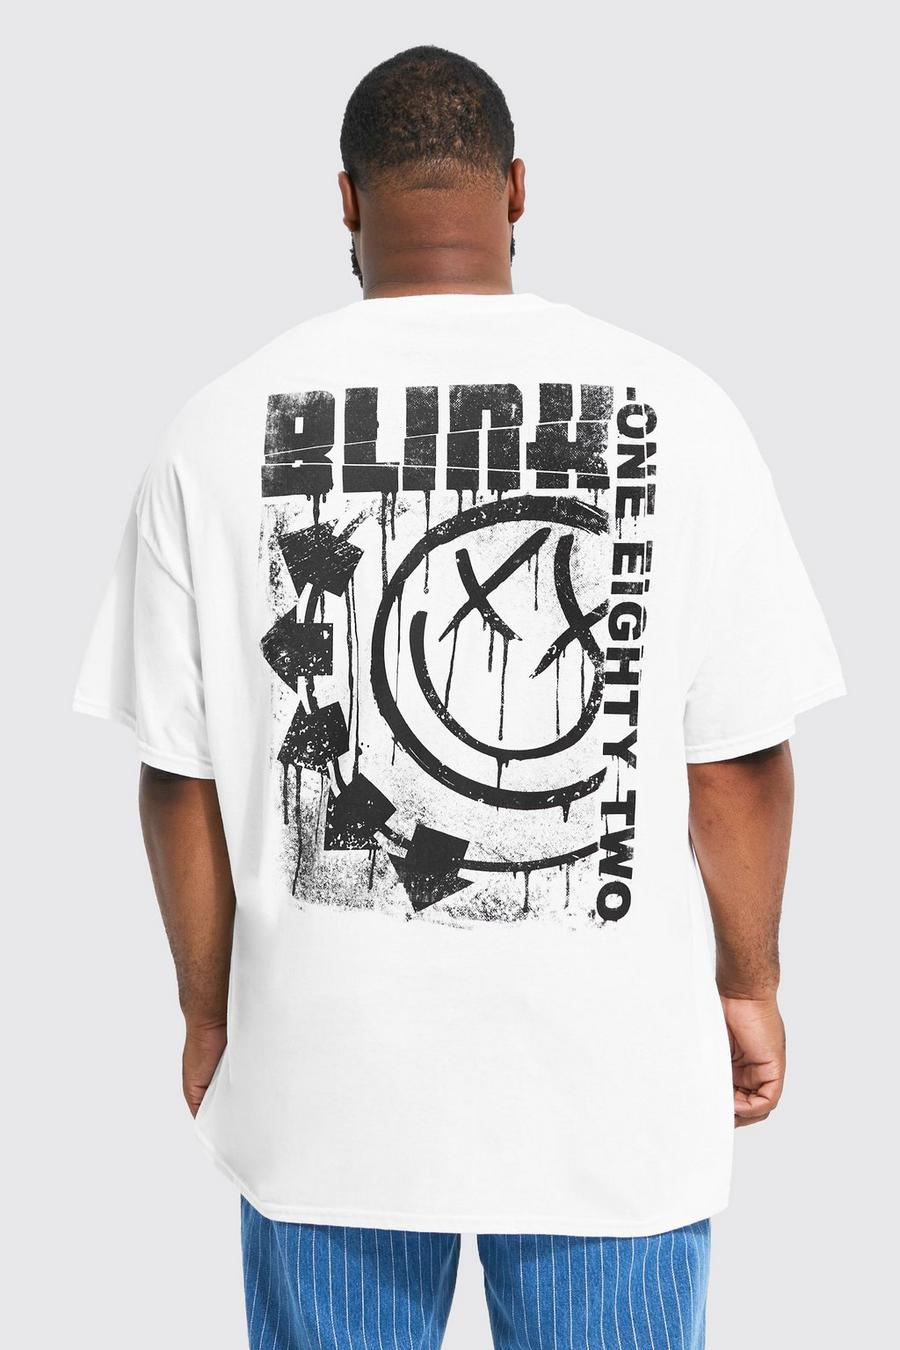 T-shirt Plus Size ufficiale dei Blink 182, White